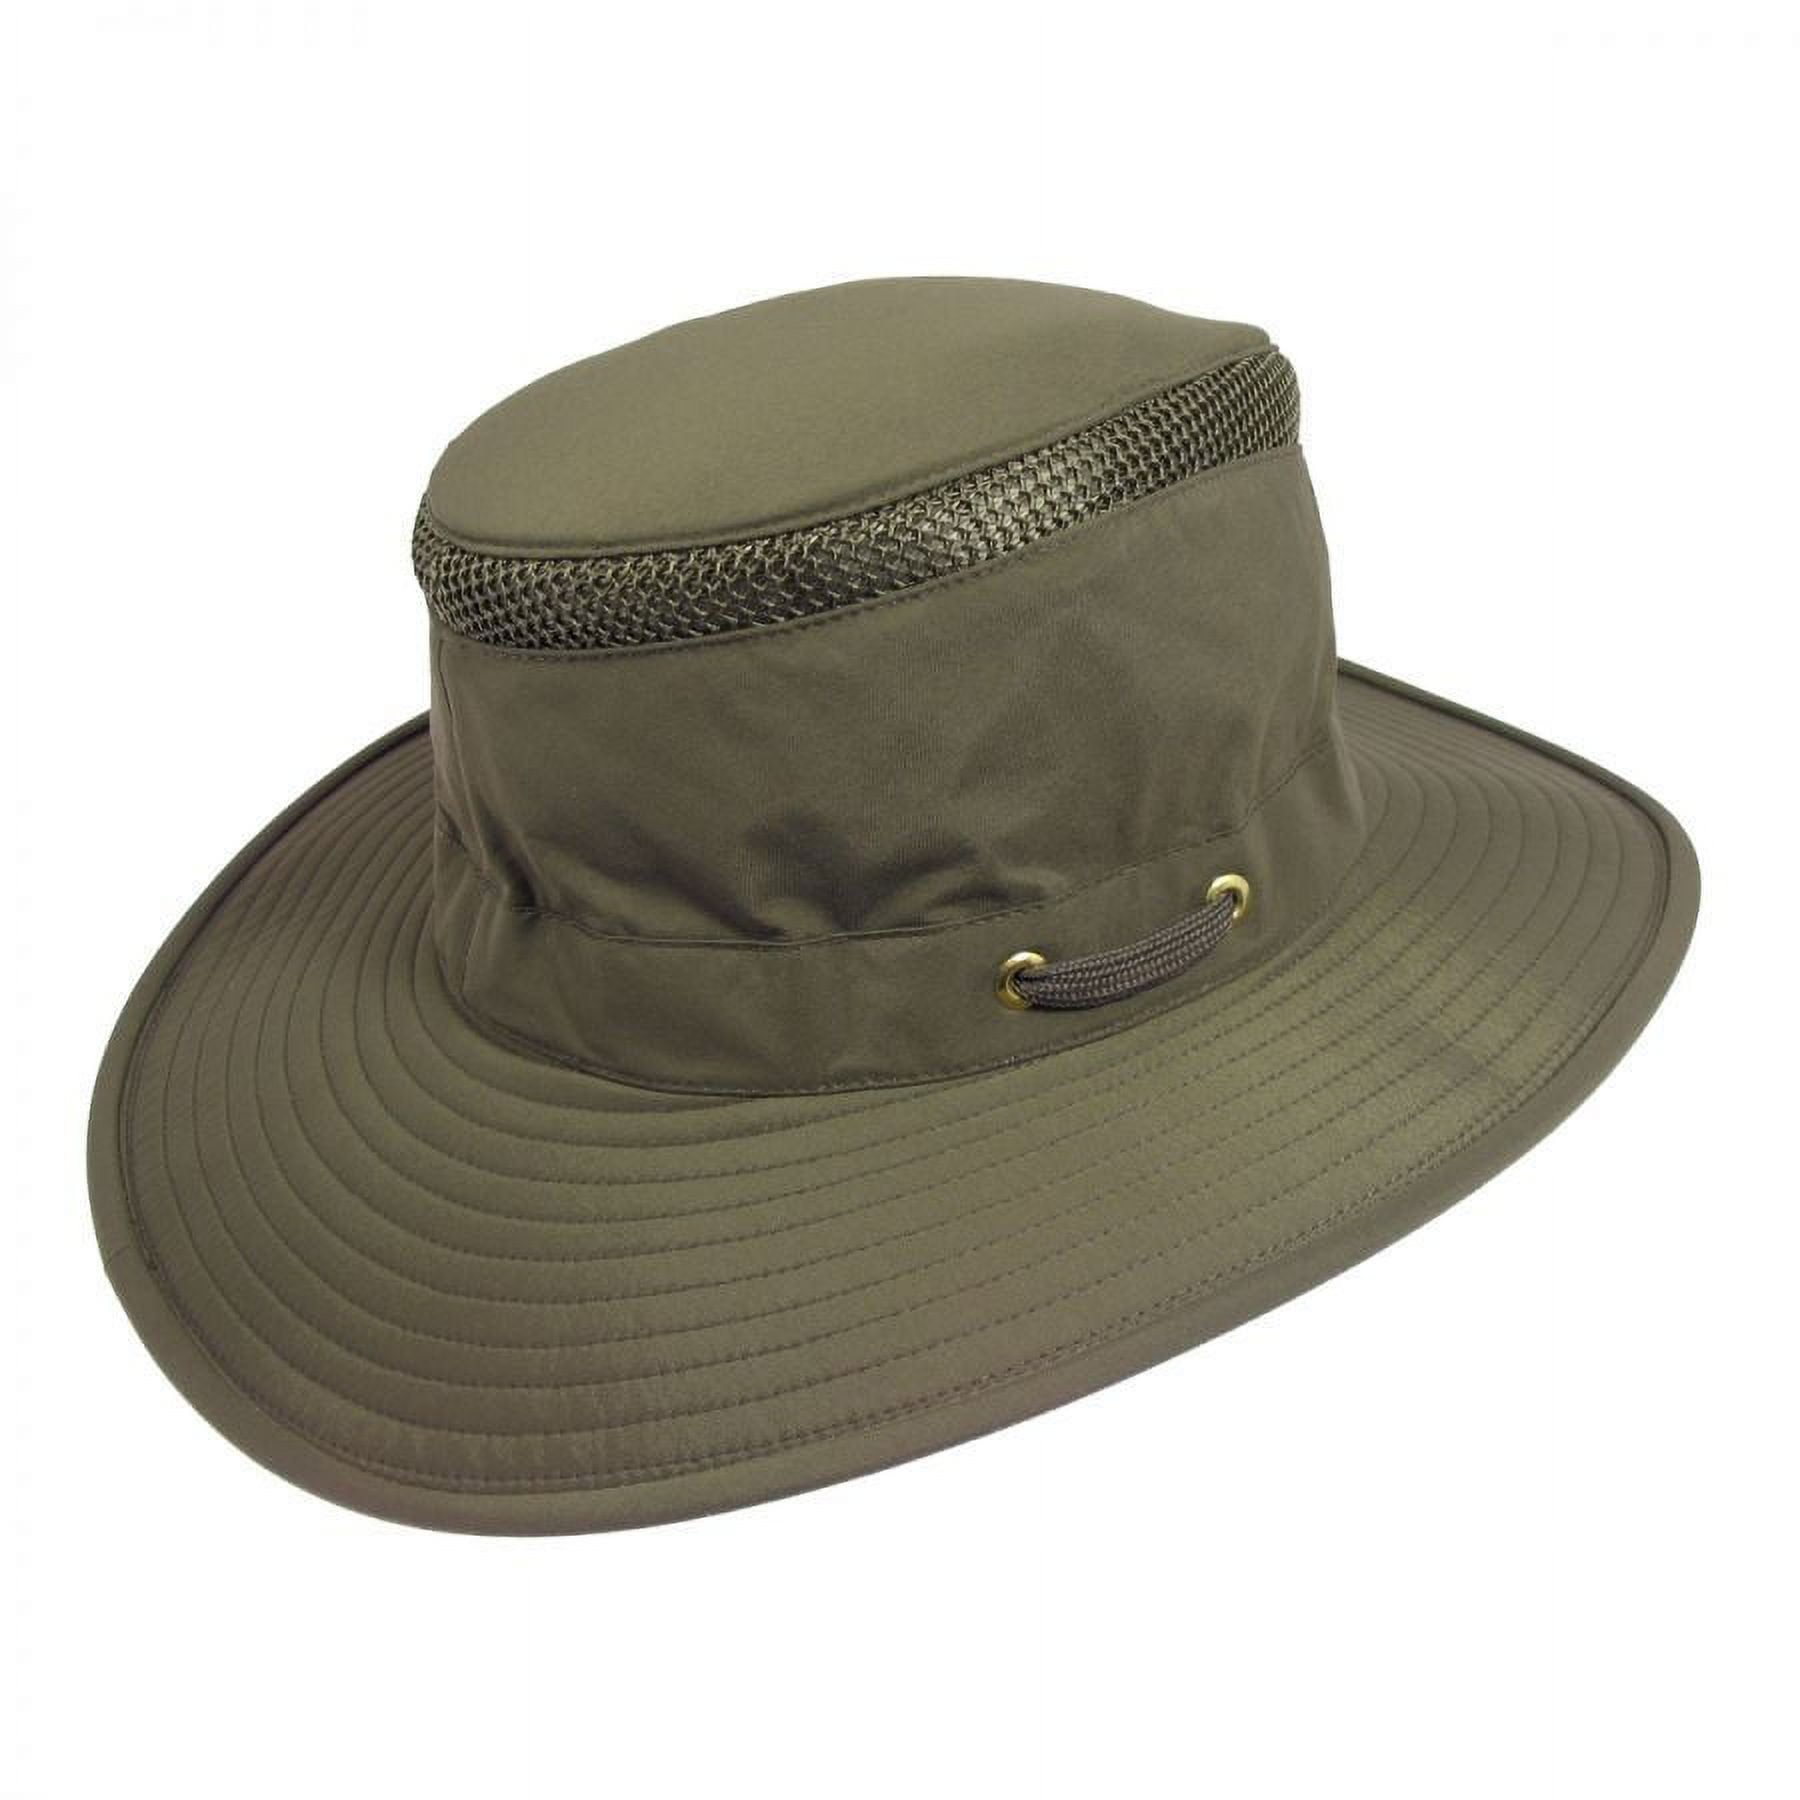 tilley endurables ltm6 airflo hat,olive,7